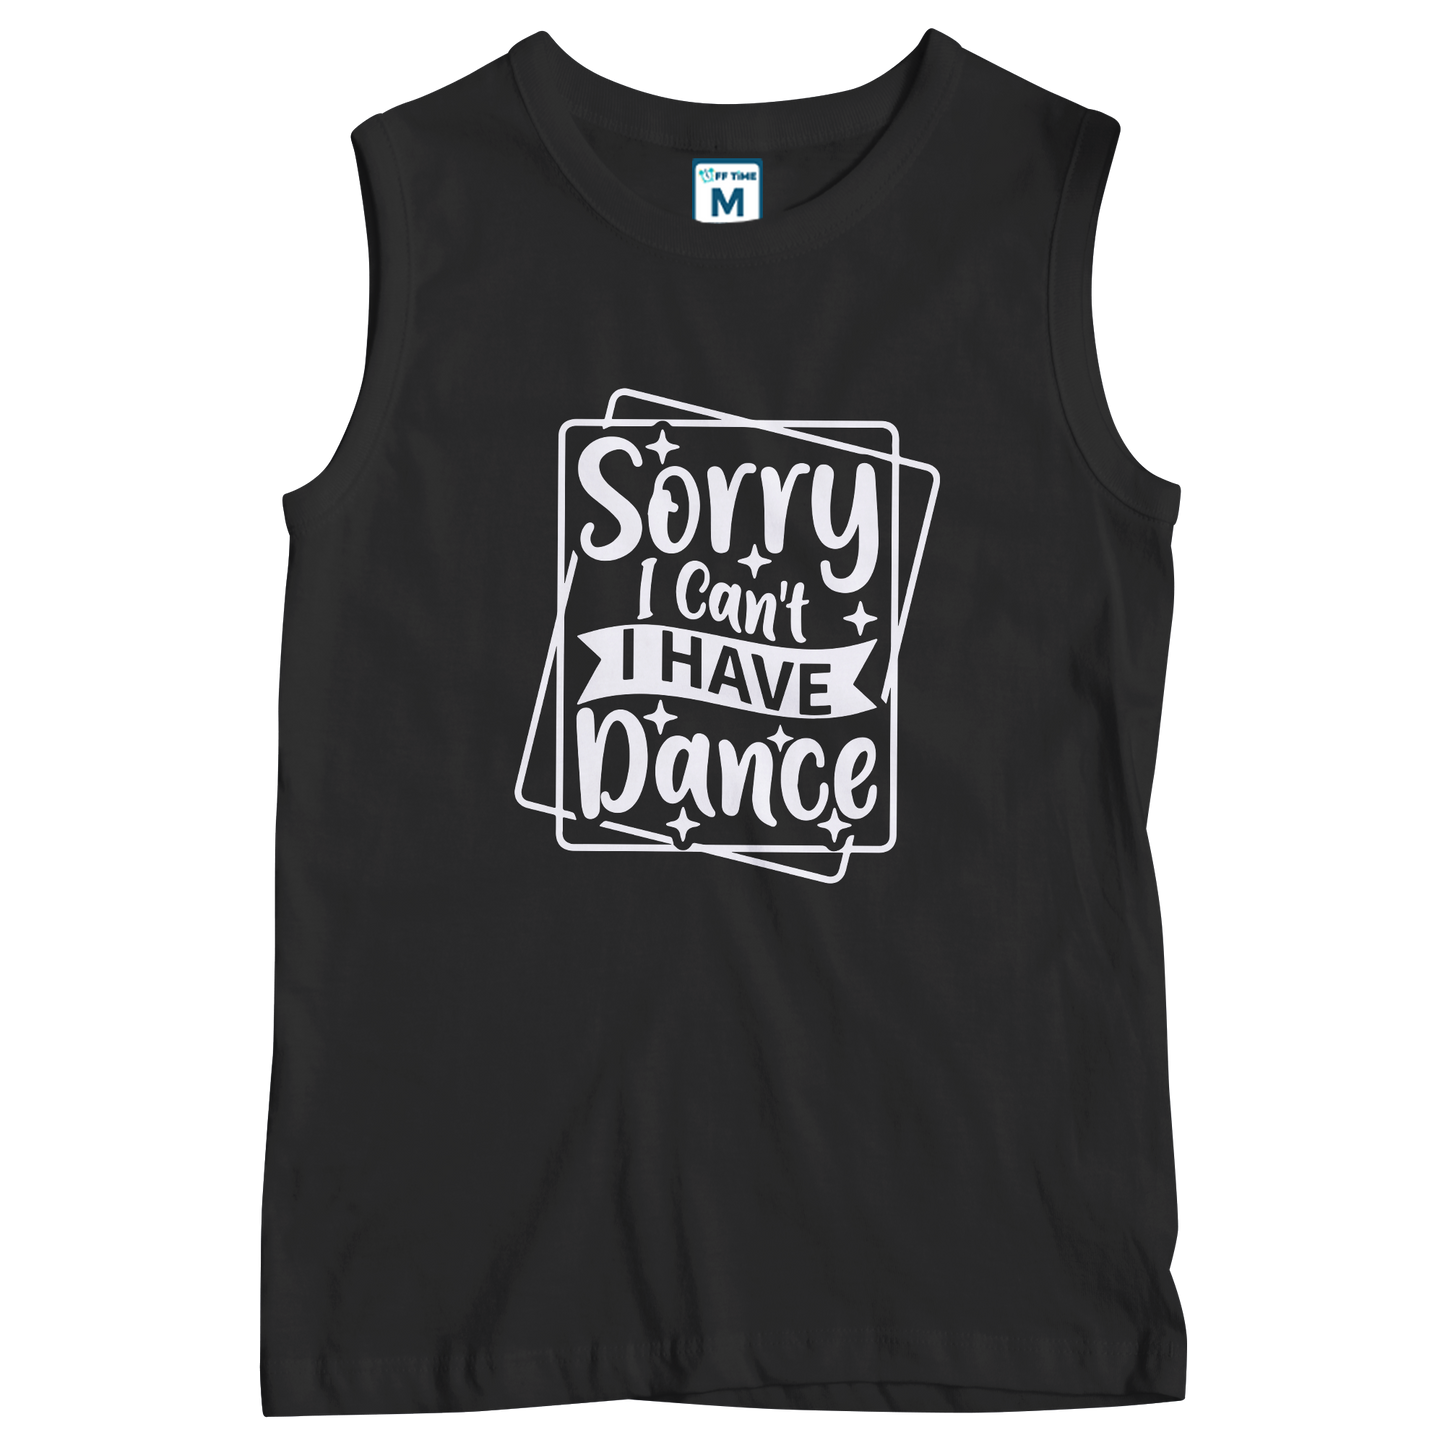 Sleeveless Drifit Shirt: Sorry Have Dance